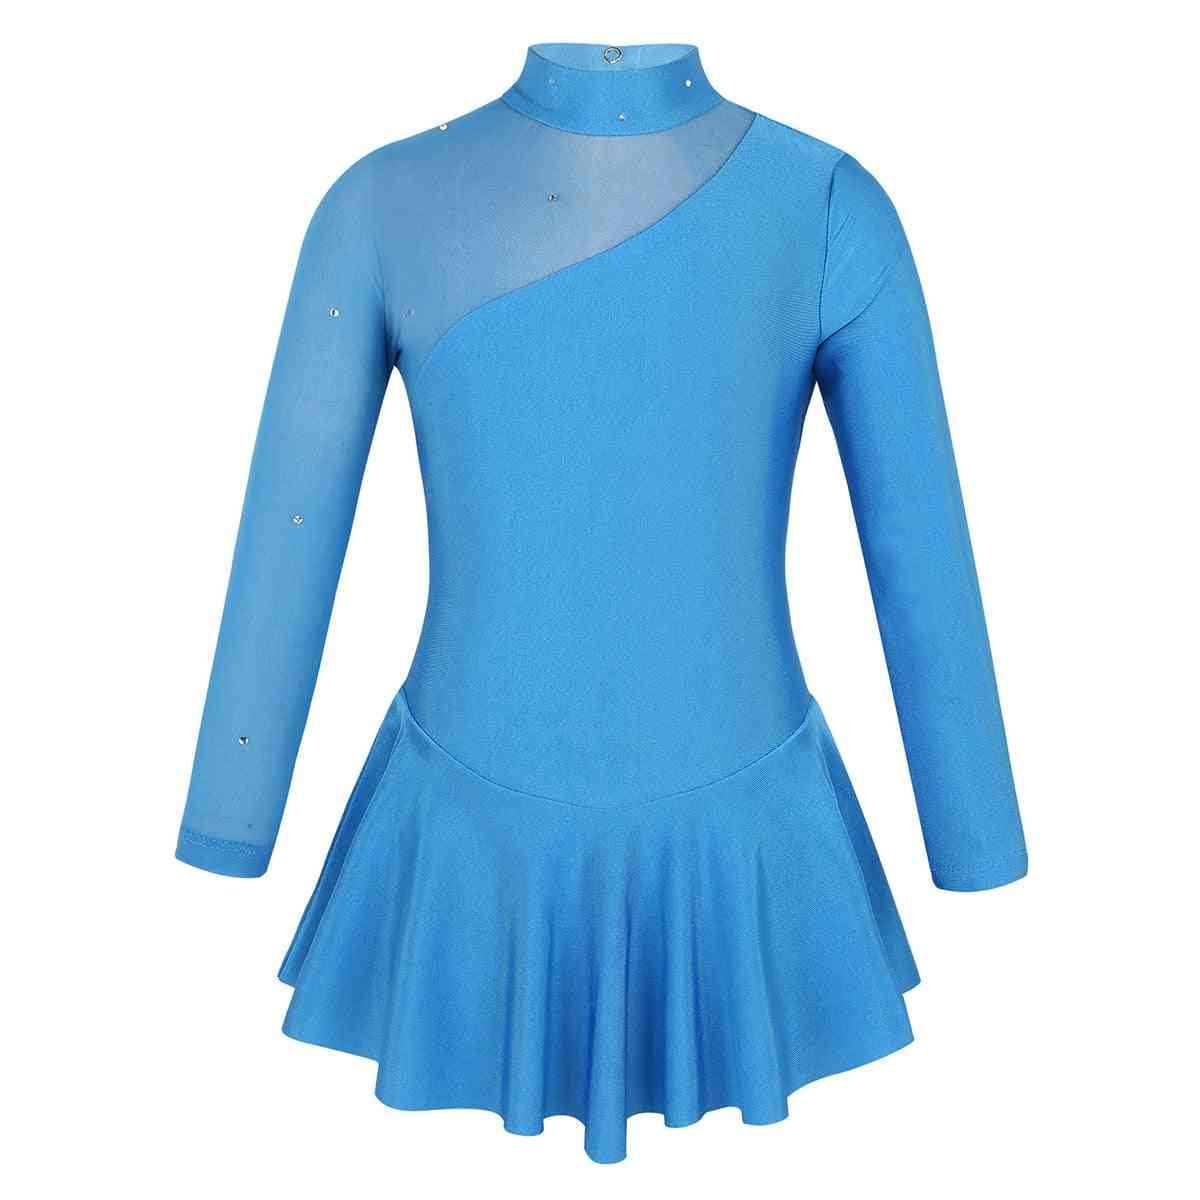 Vestido de competición de patinaje sobre hielo para niñas, recortes de empalme de tul de manga larga